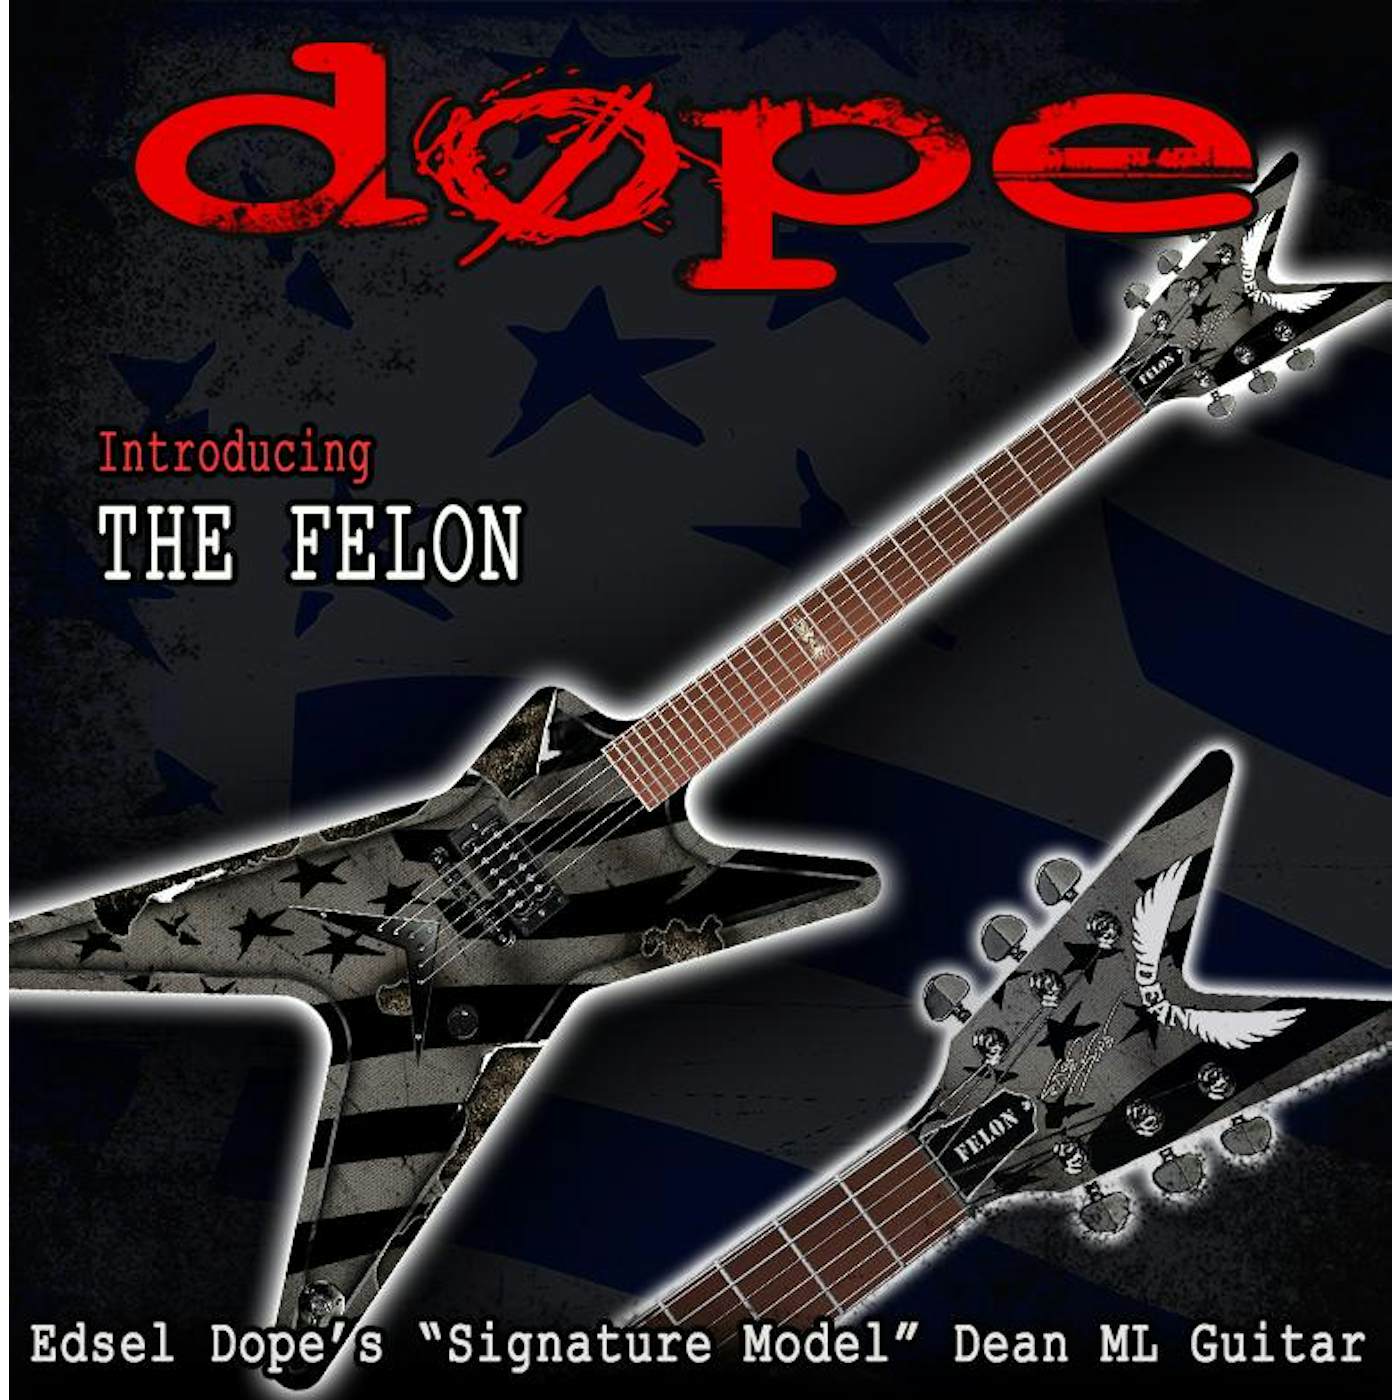 Dope Limited Edition Signature Dean "Felon" Guitar